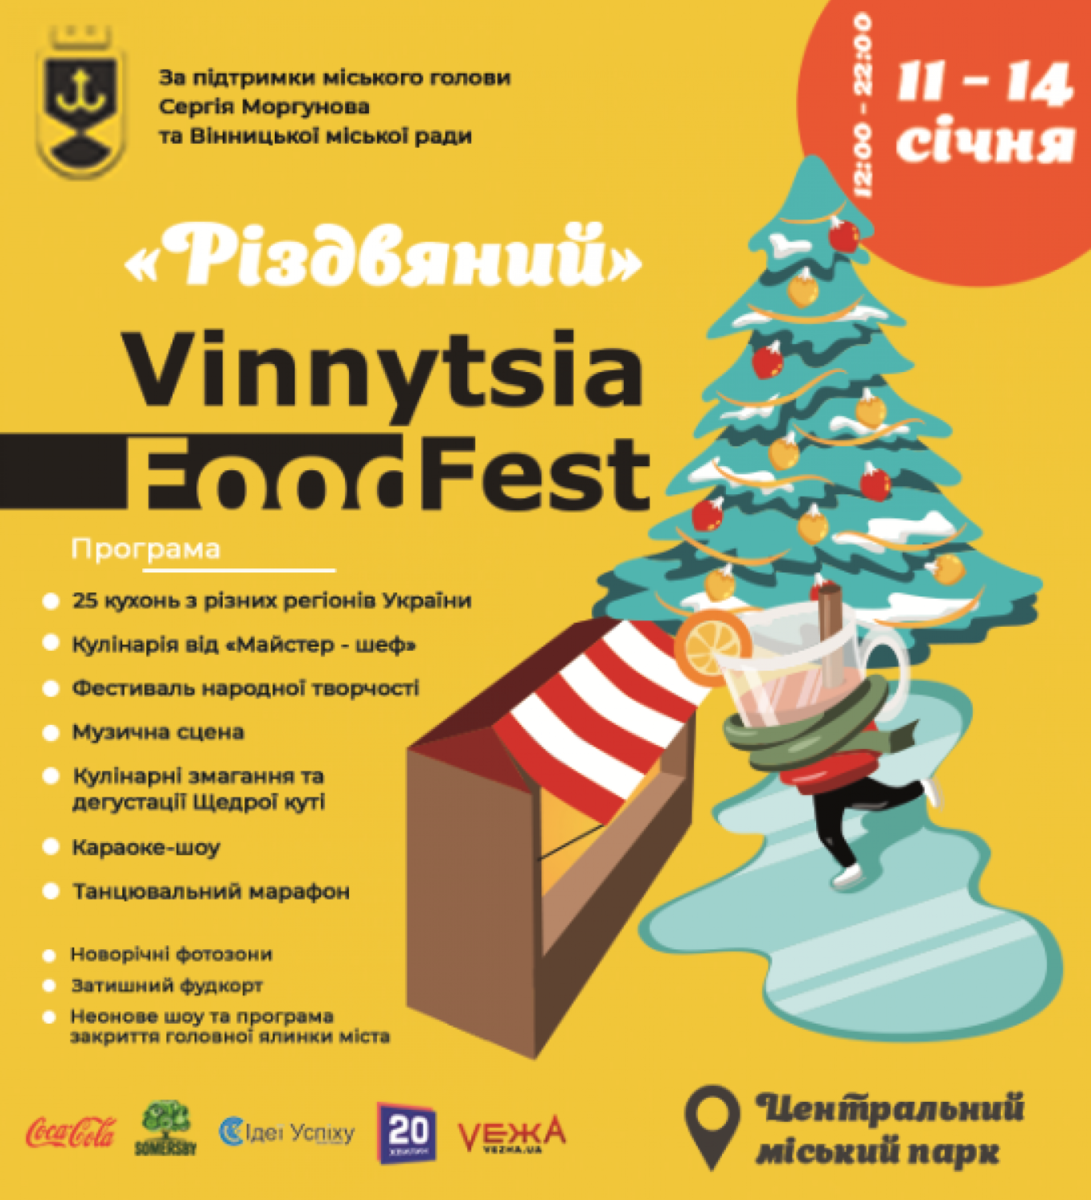 Різдвяний Vinnytsia Food Fest. Програма Фуд фест 